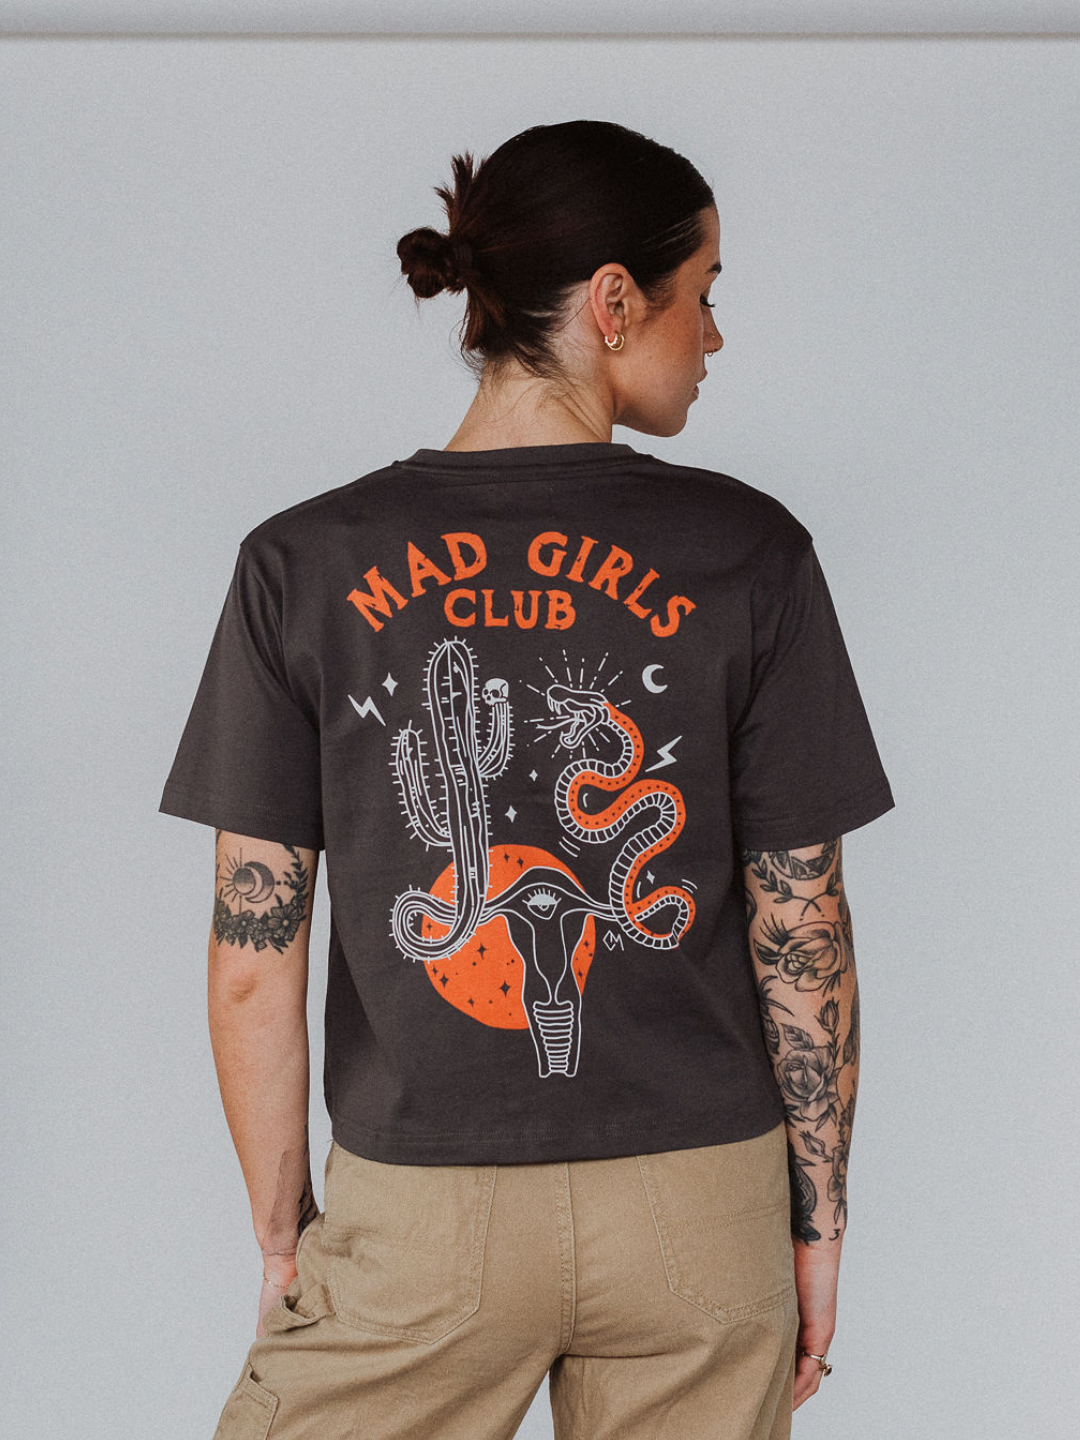 Mad Girls Club T-Shirt - Octopied Mind